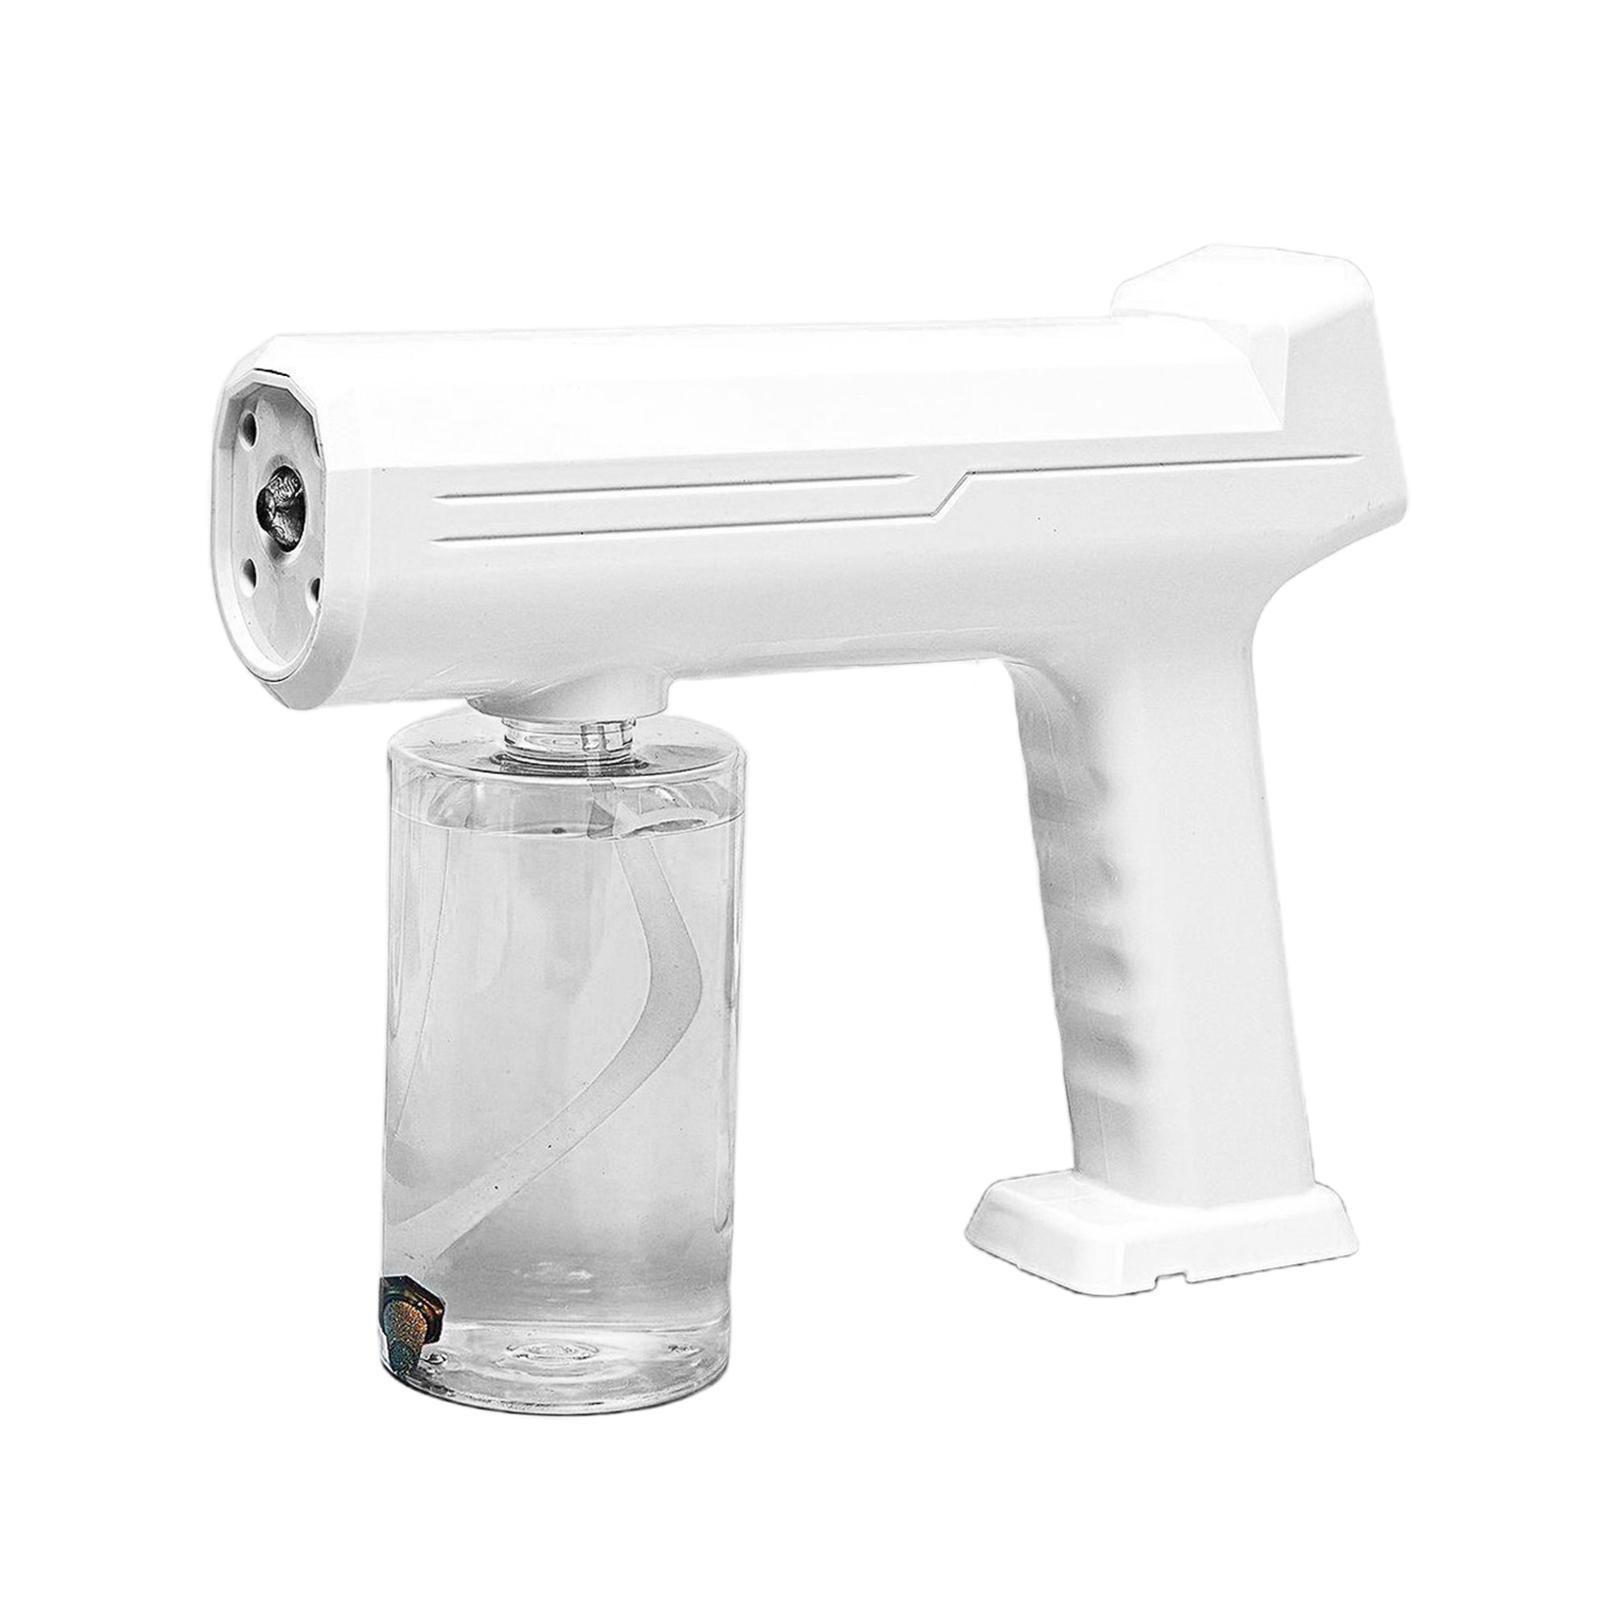 2Pcs Cordless Sanitizer Sprayer Disinfectant Fogger Indoor Outdoor White